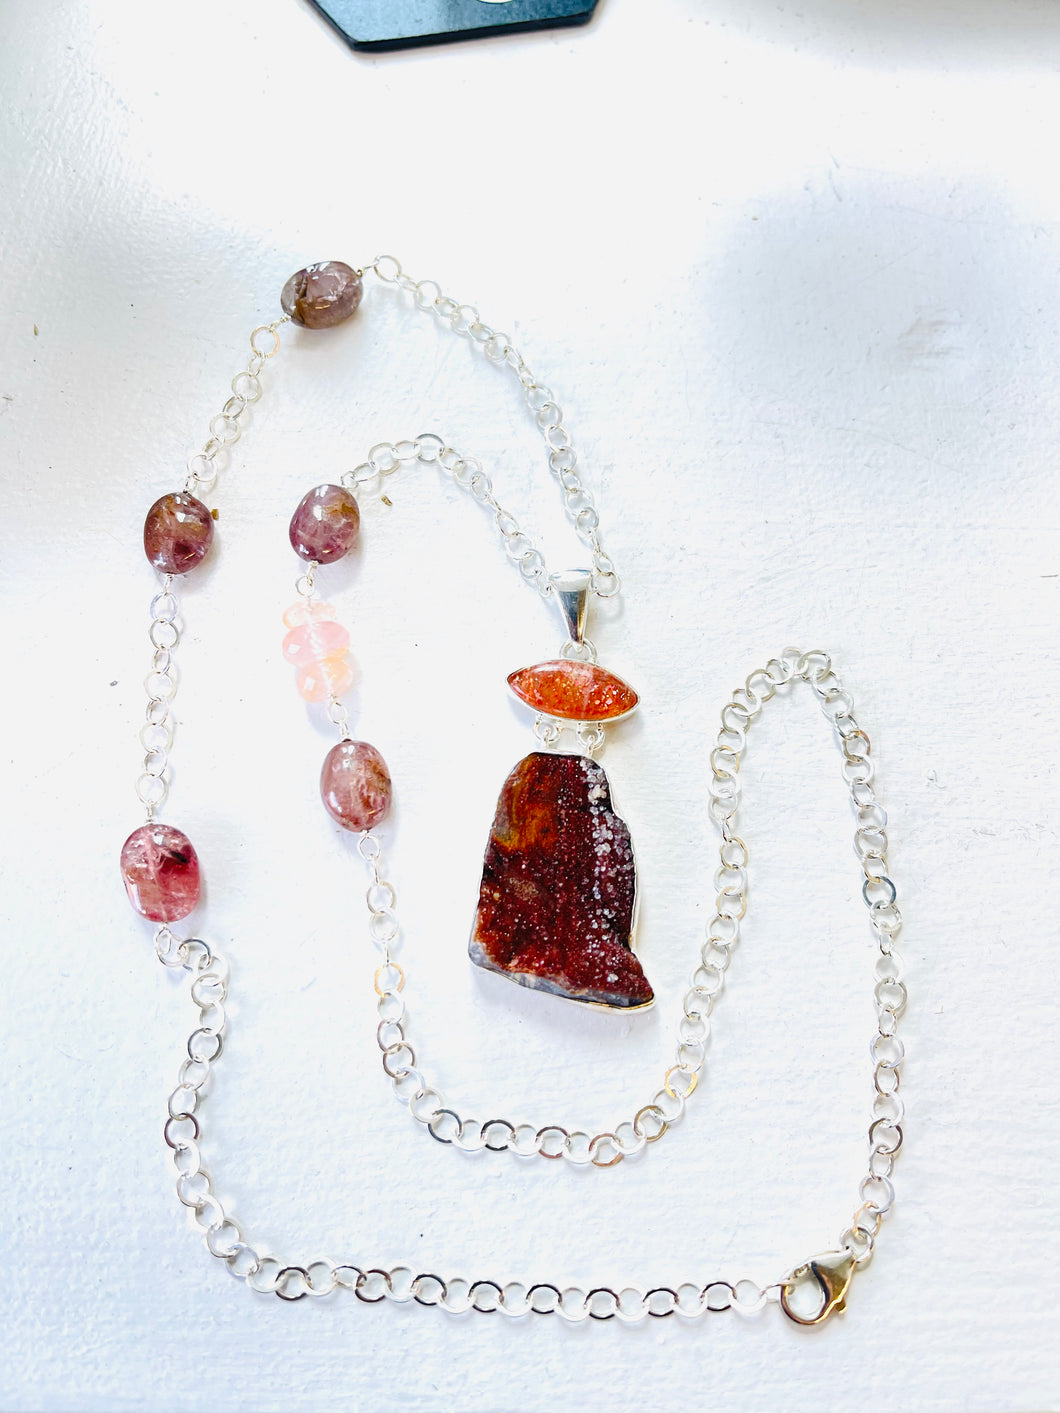 Necklace with natural quartz